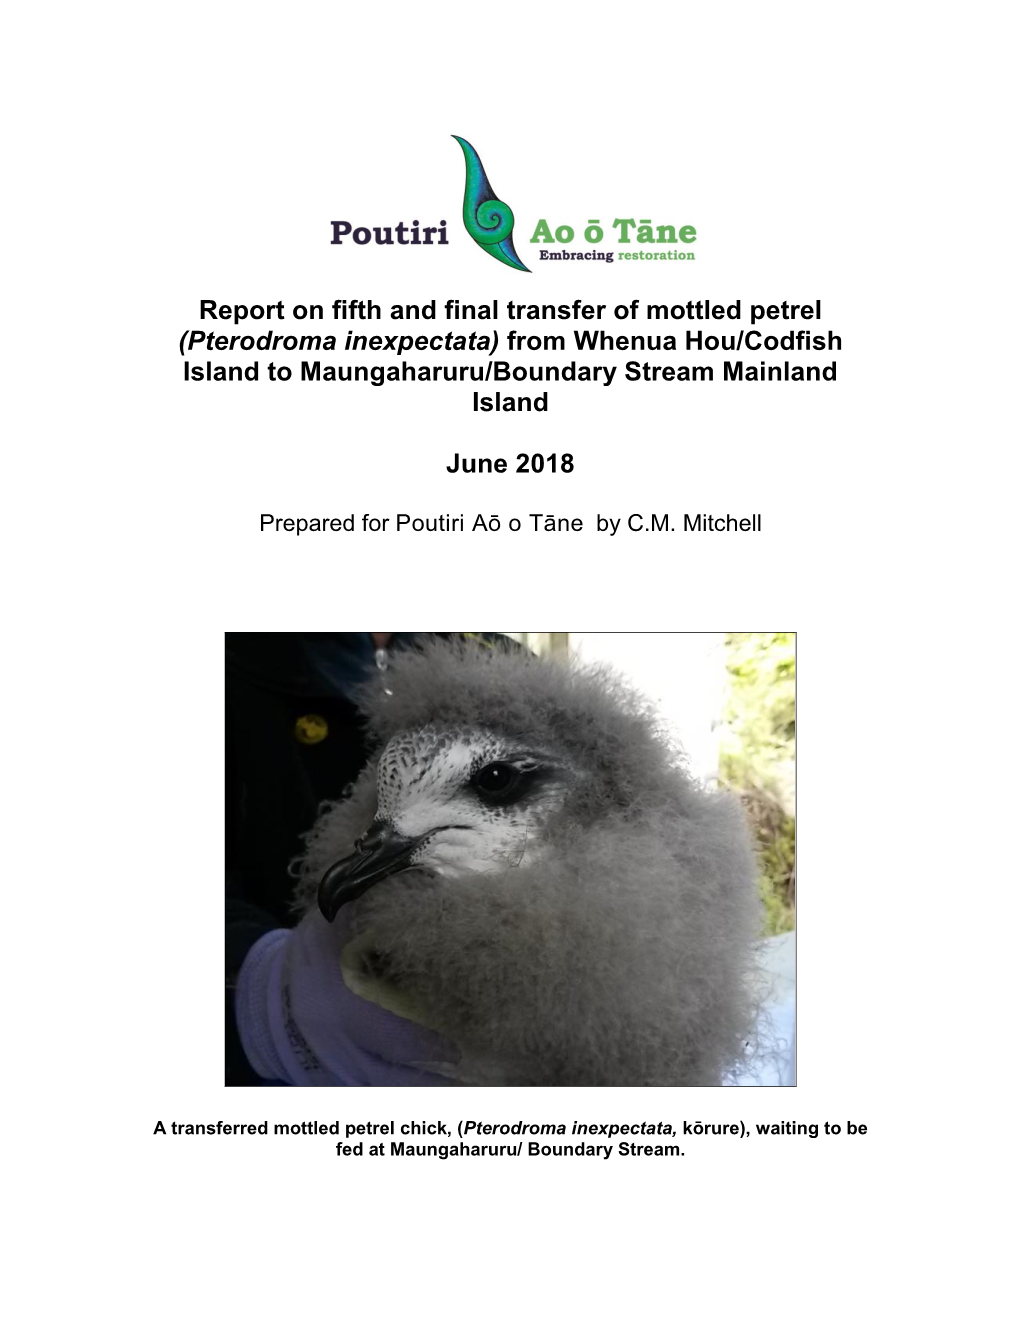 Report on Fifth and Final Transfer of Mottled Petrel (Pterodroma Inexpectata) from Whenua Hou/Codfish Island to Maungaharuru/Boundary Stream Mainland Island